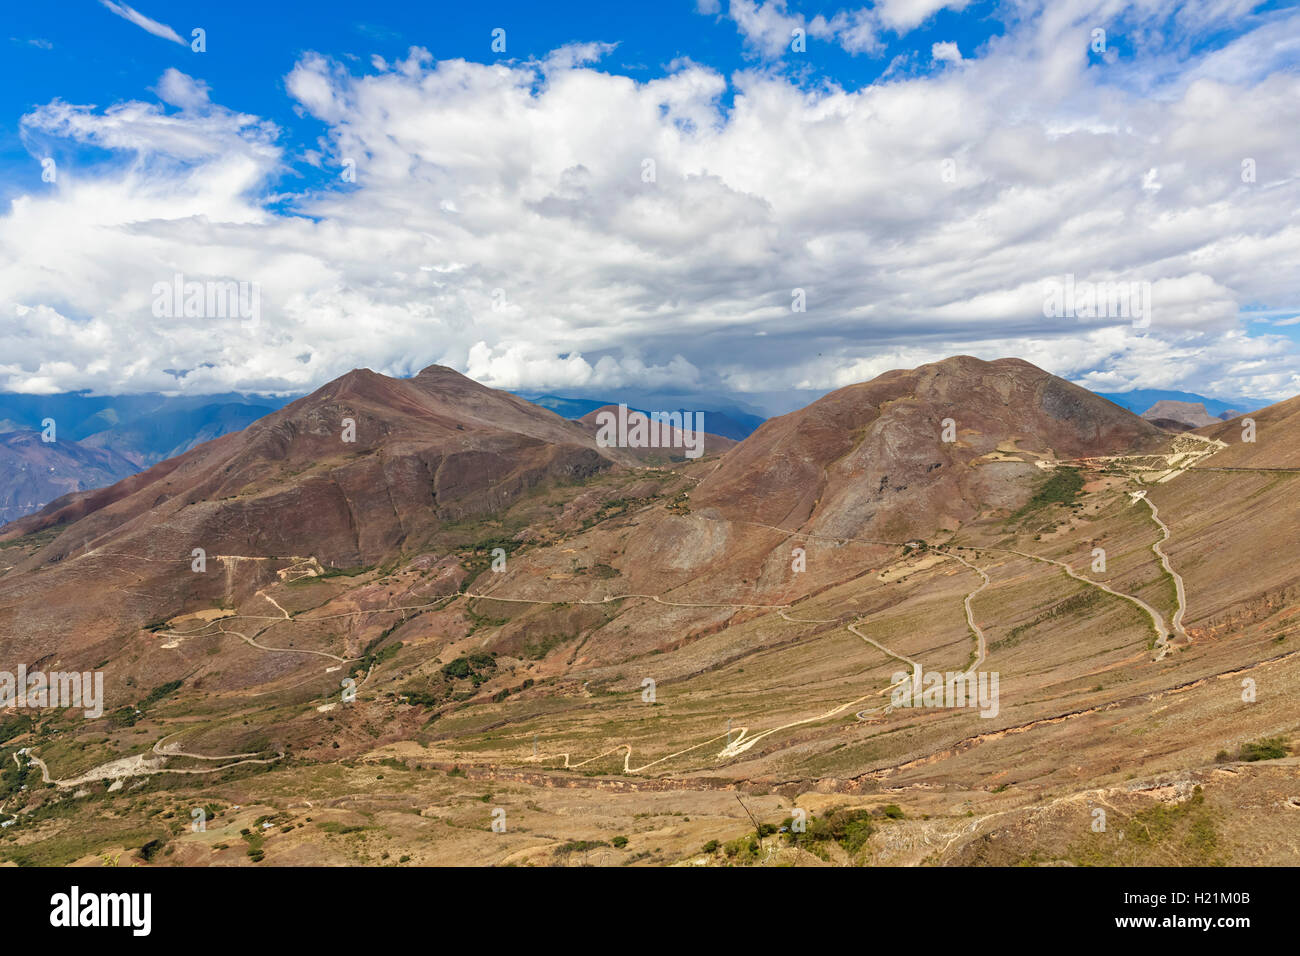 Peru, Cajamarca region, Celendin, Serpentines in the Andes Stock Photo